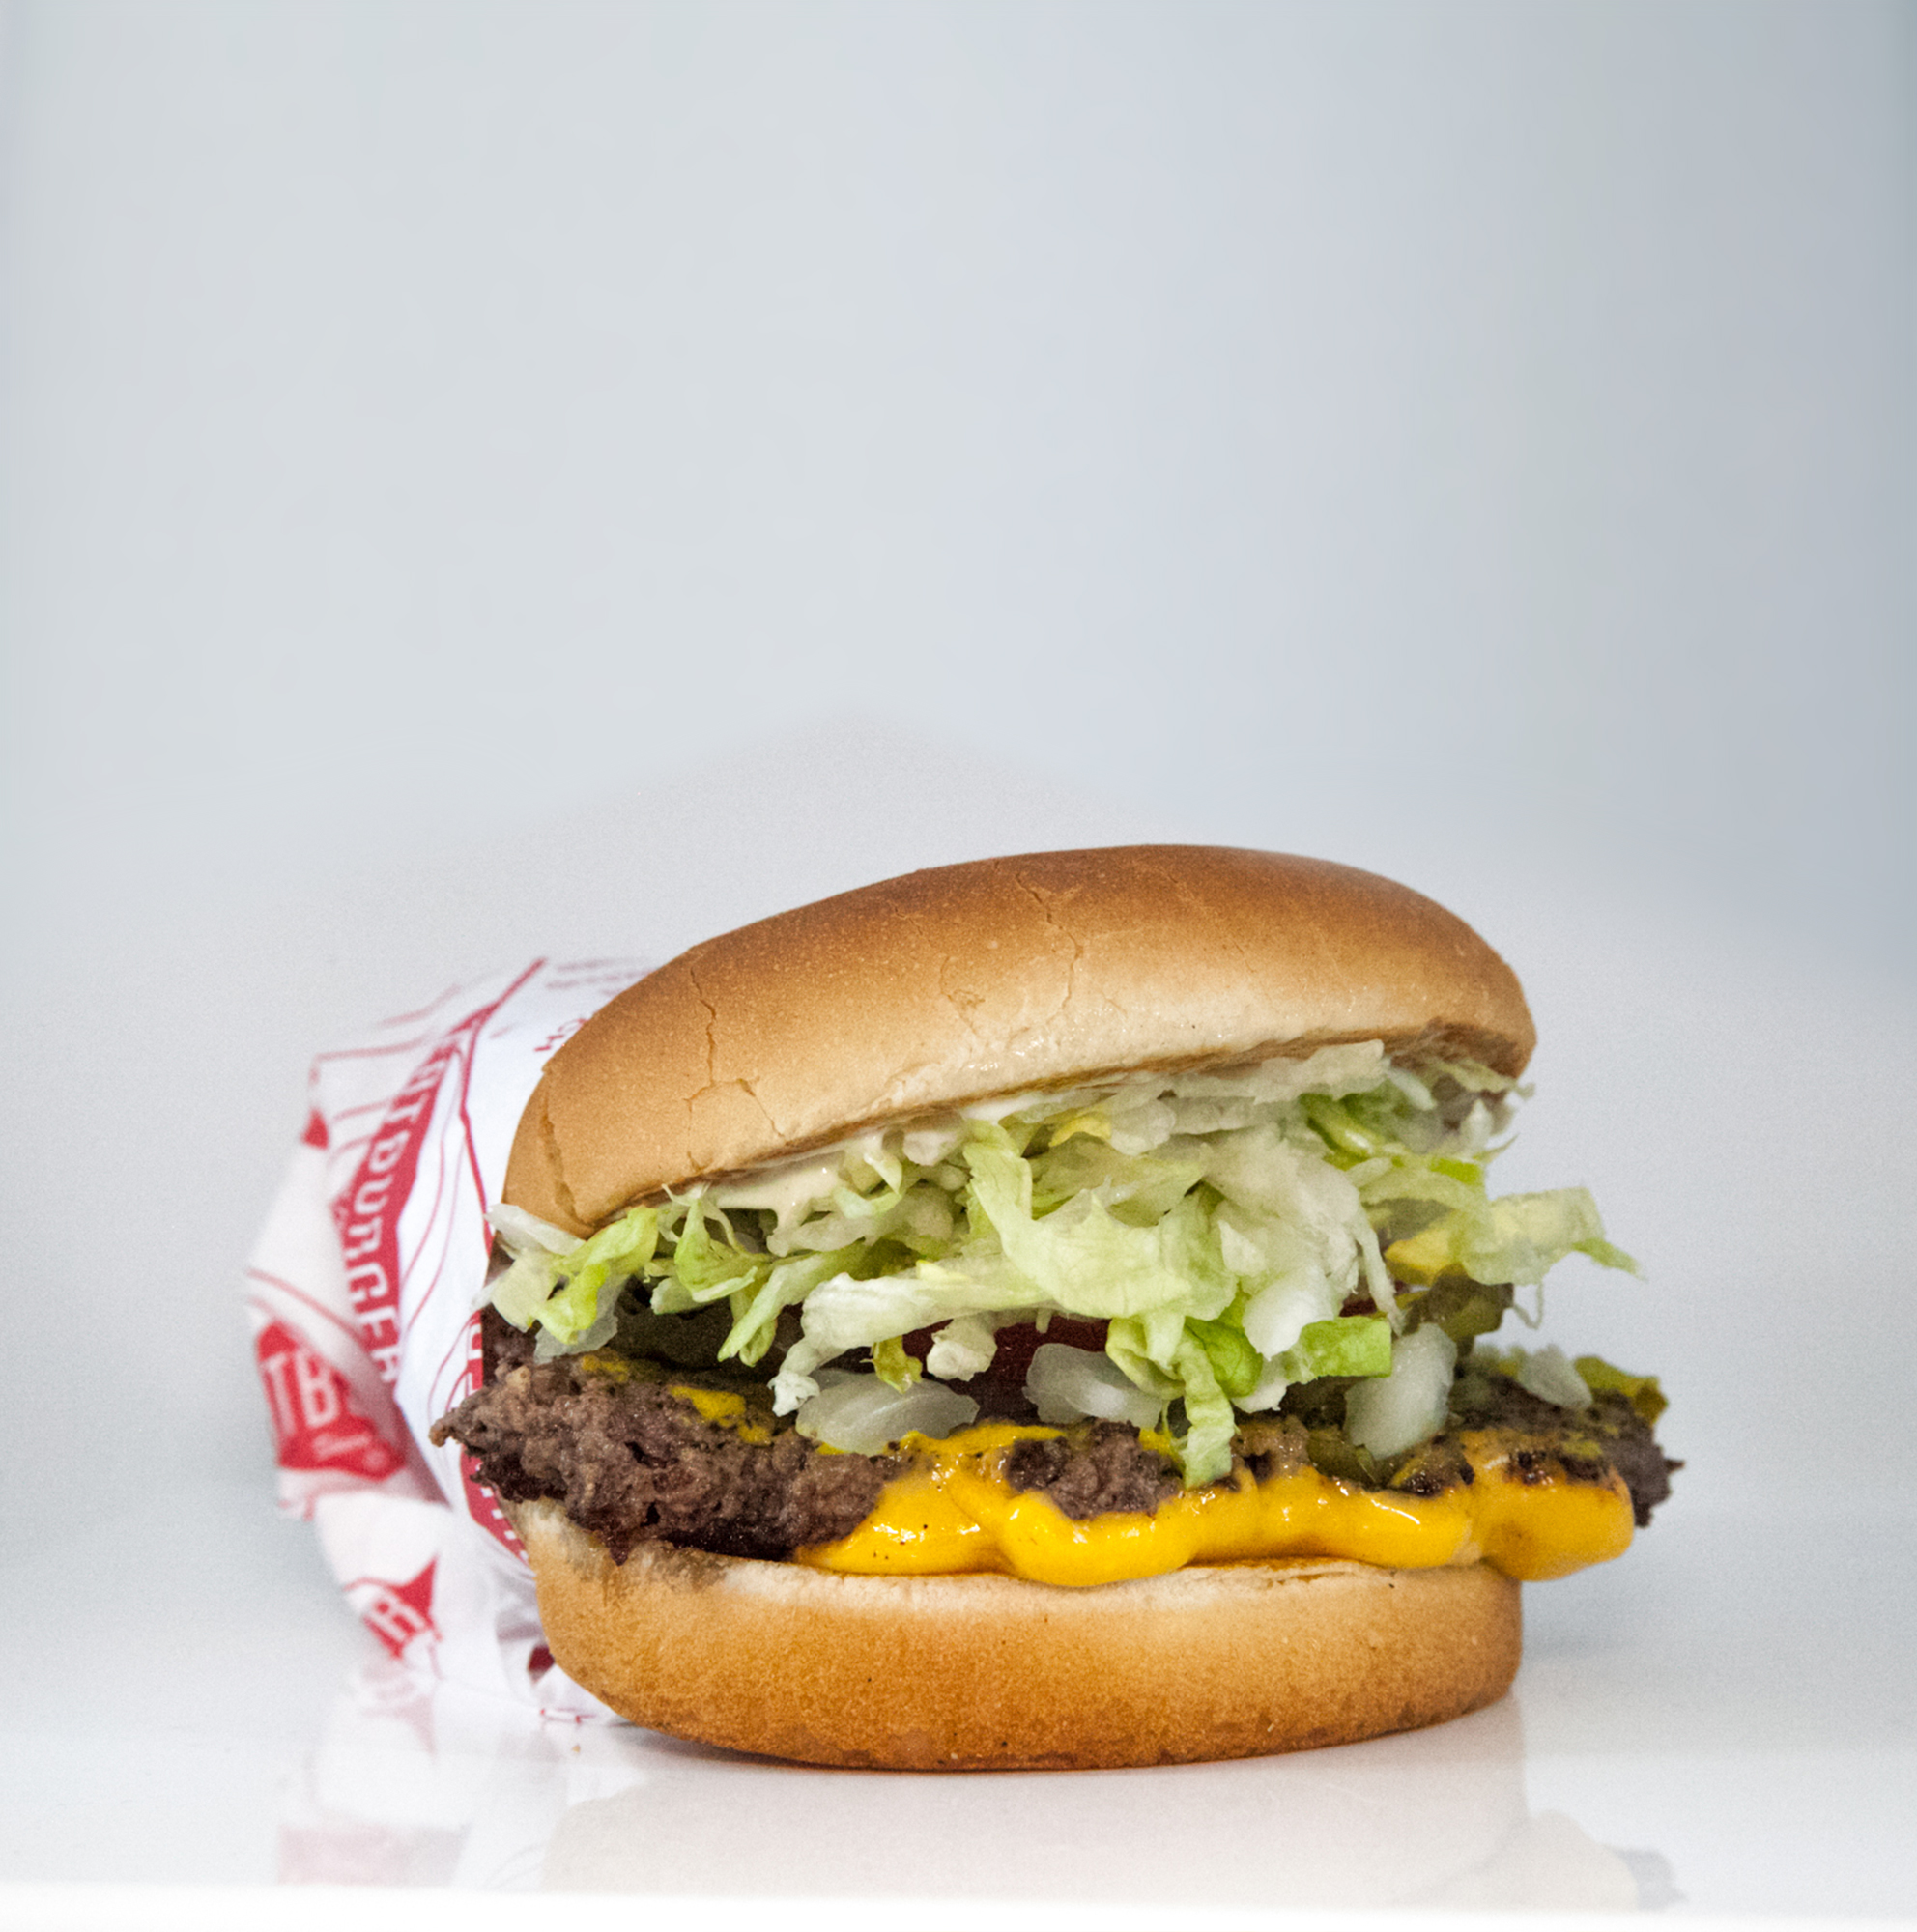 Fatburger---Product-1-June-2018--1-Original.jpg